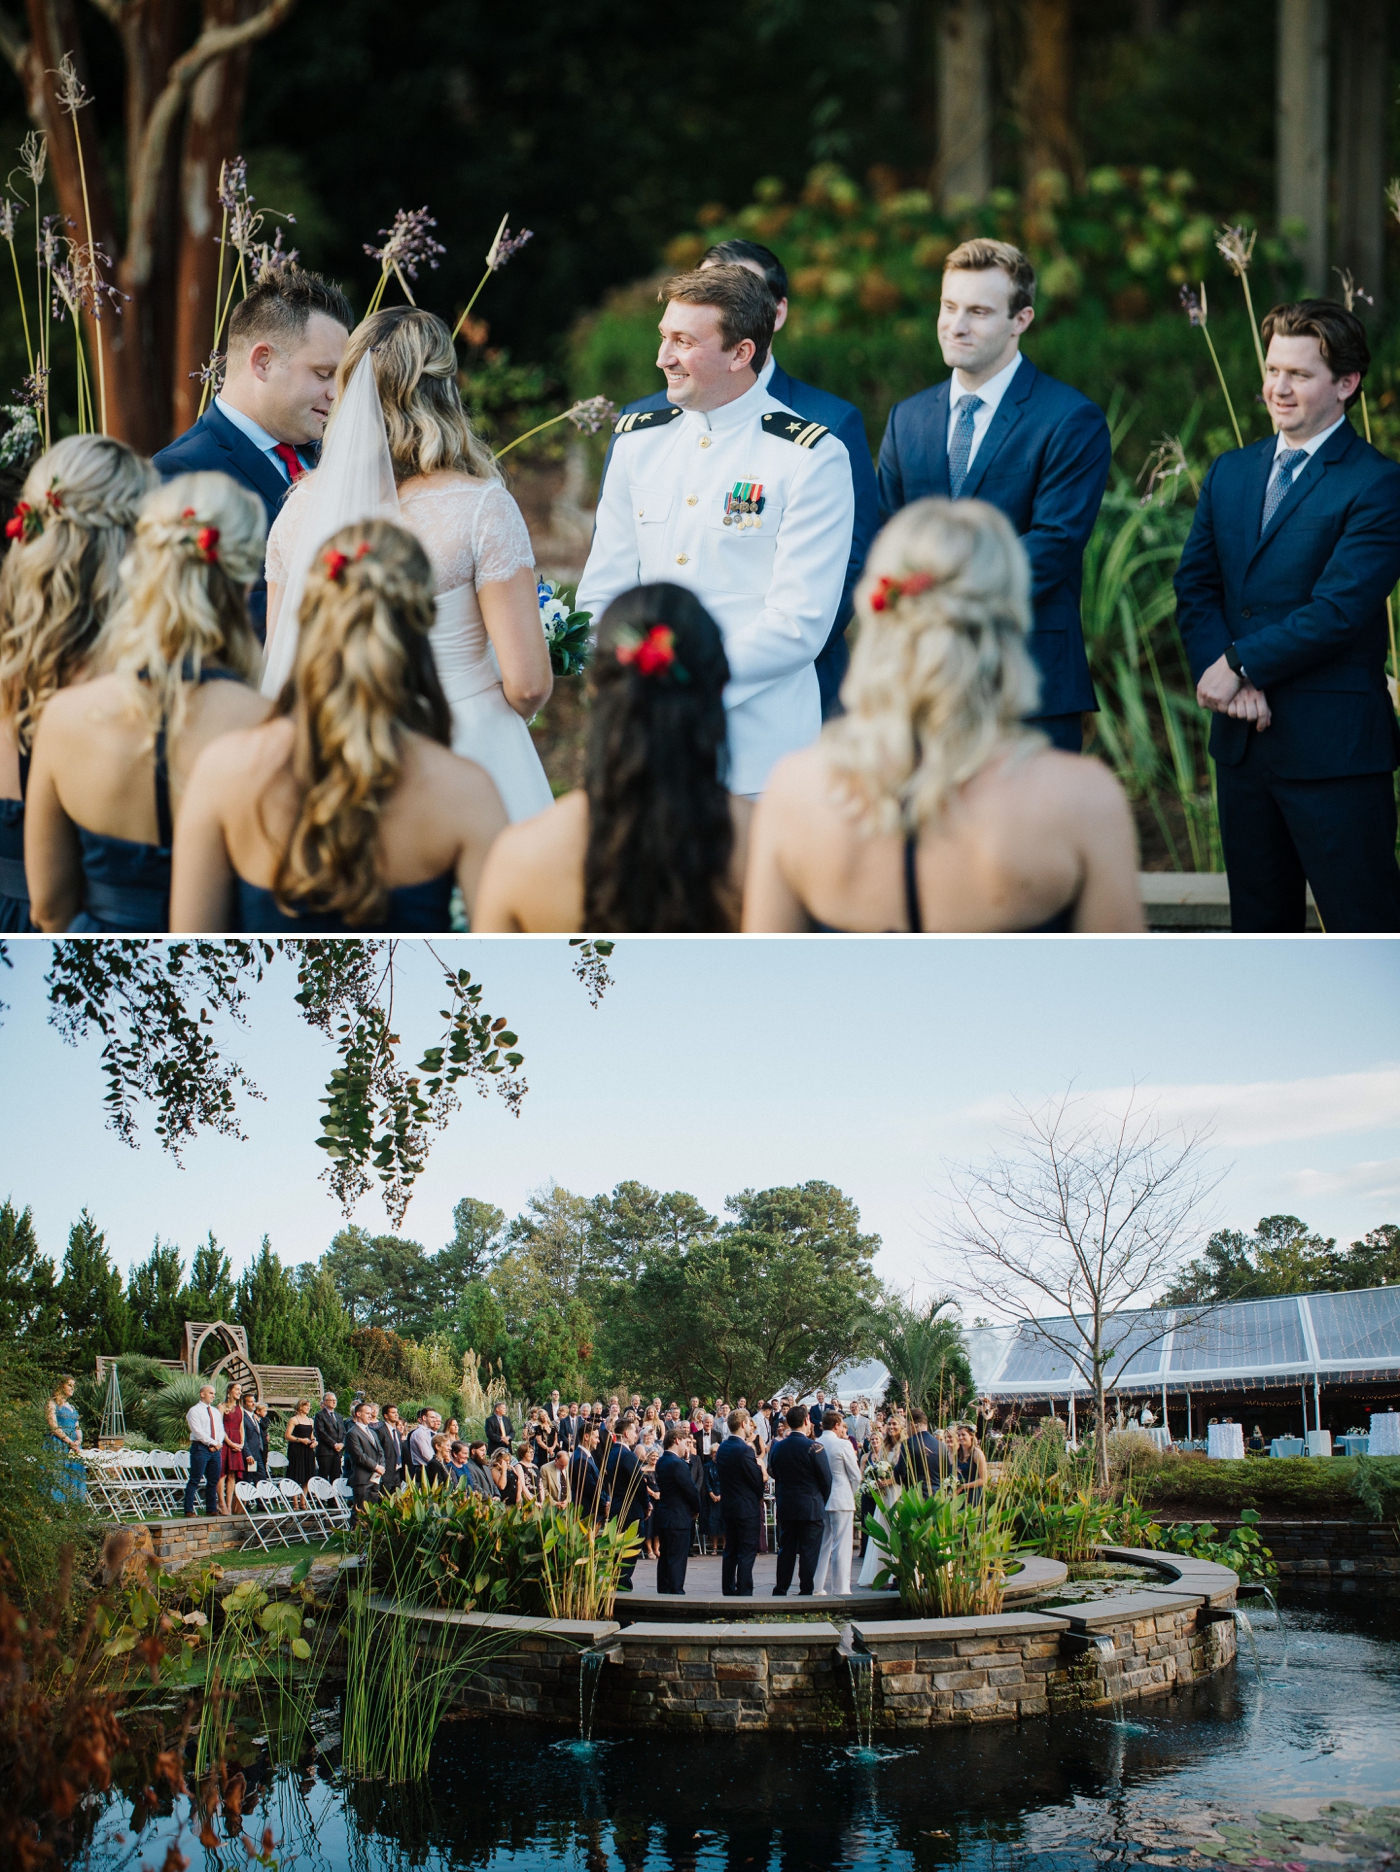 KD & Ben’s Duke Gardens Wedding Ceremony | Izzy and Co.